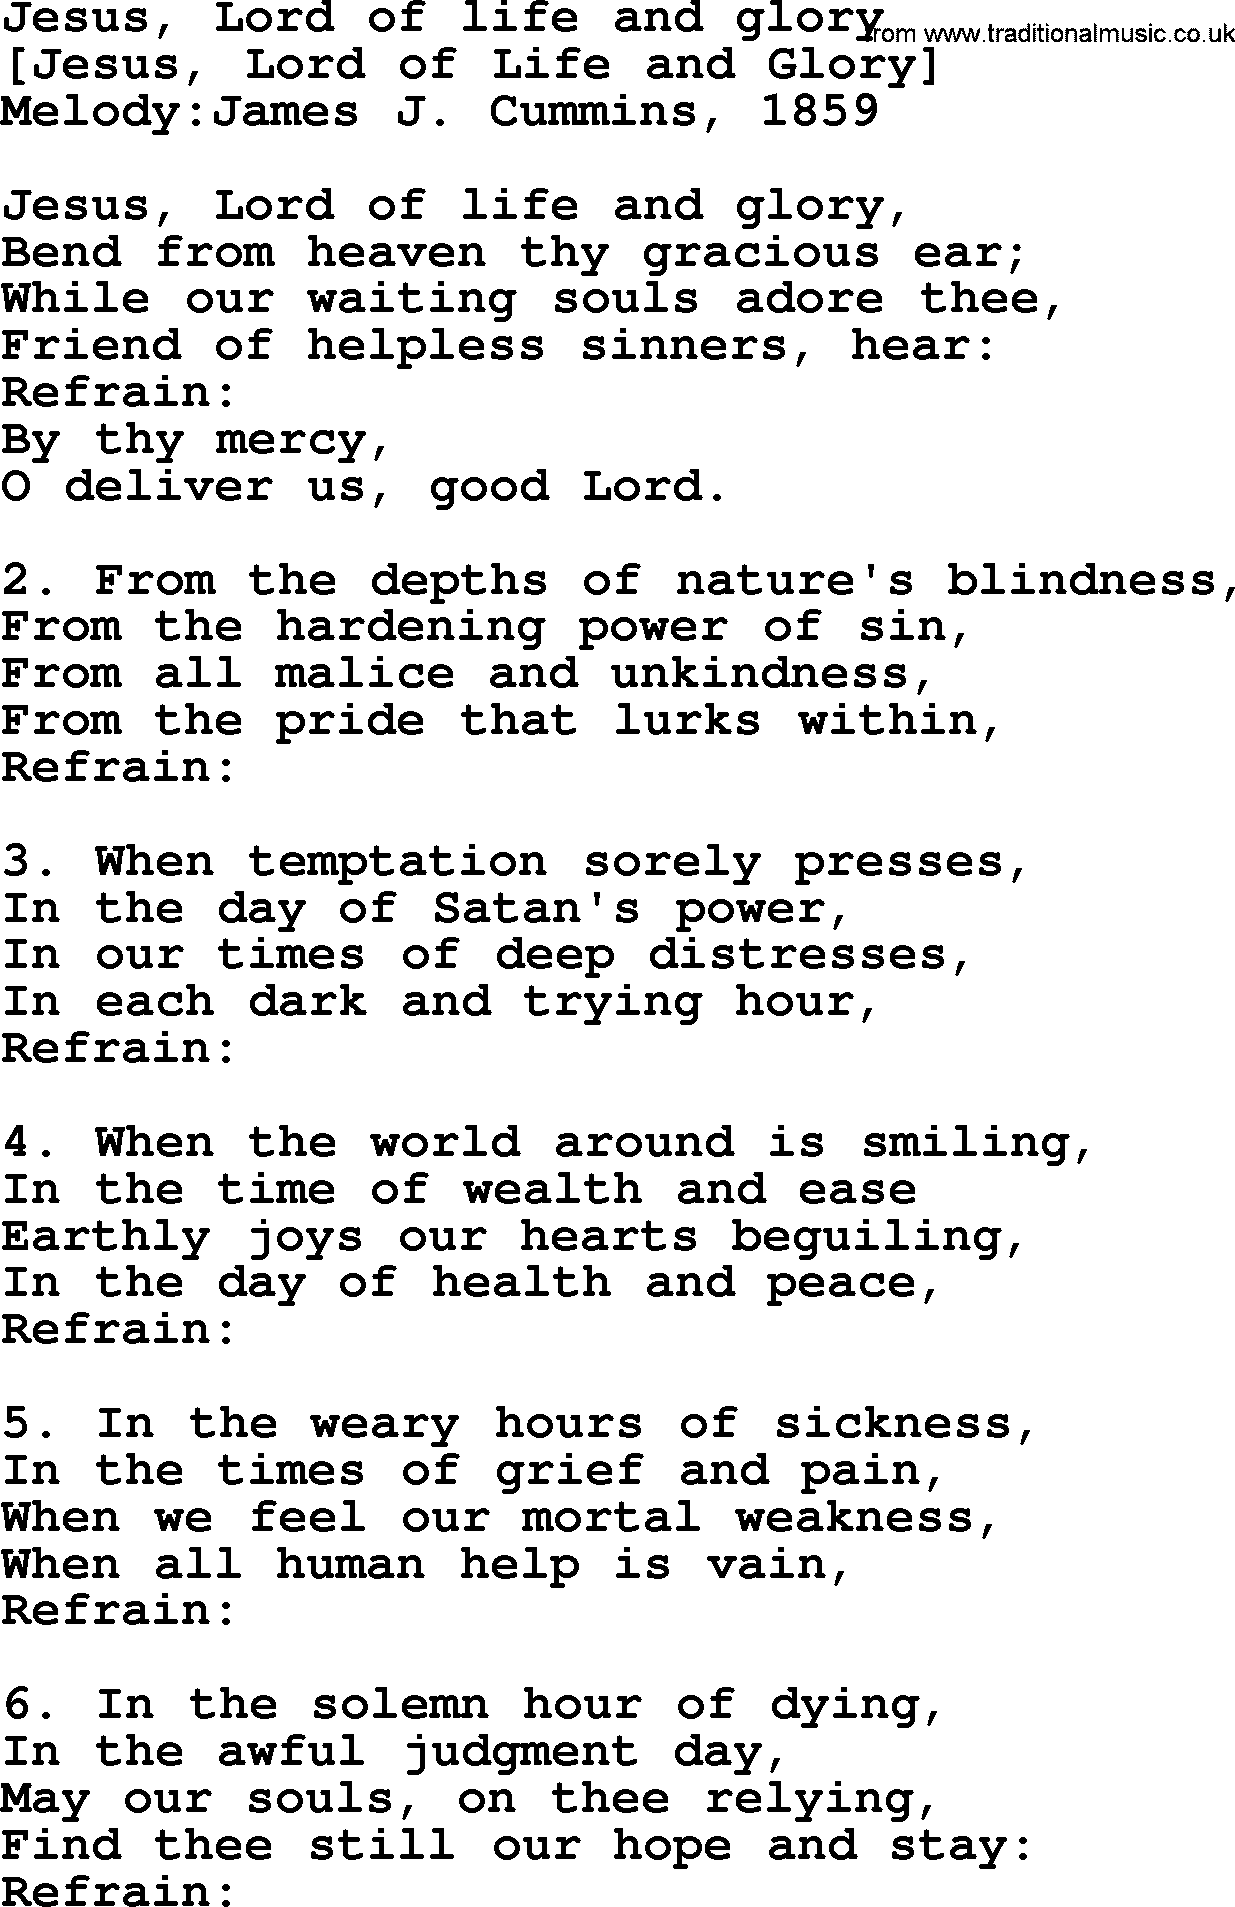 Old English Song: Jesus, Lord Of Life And Glory lyrics